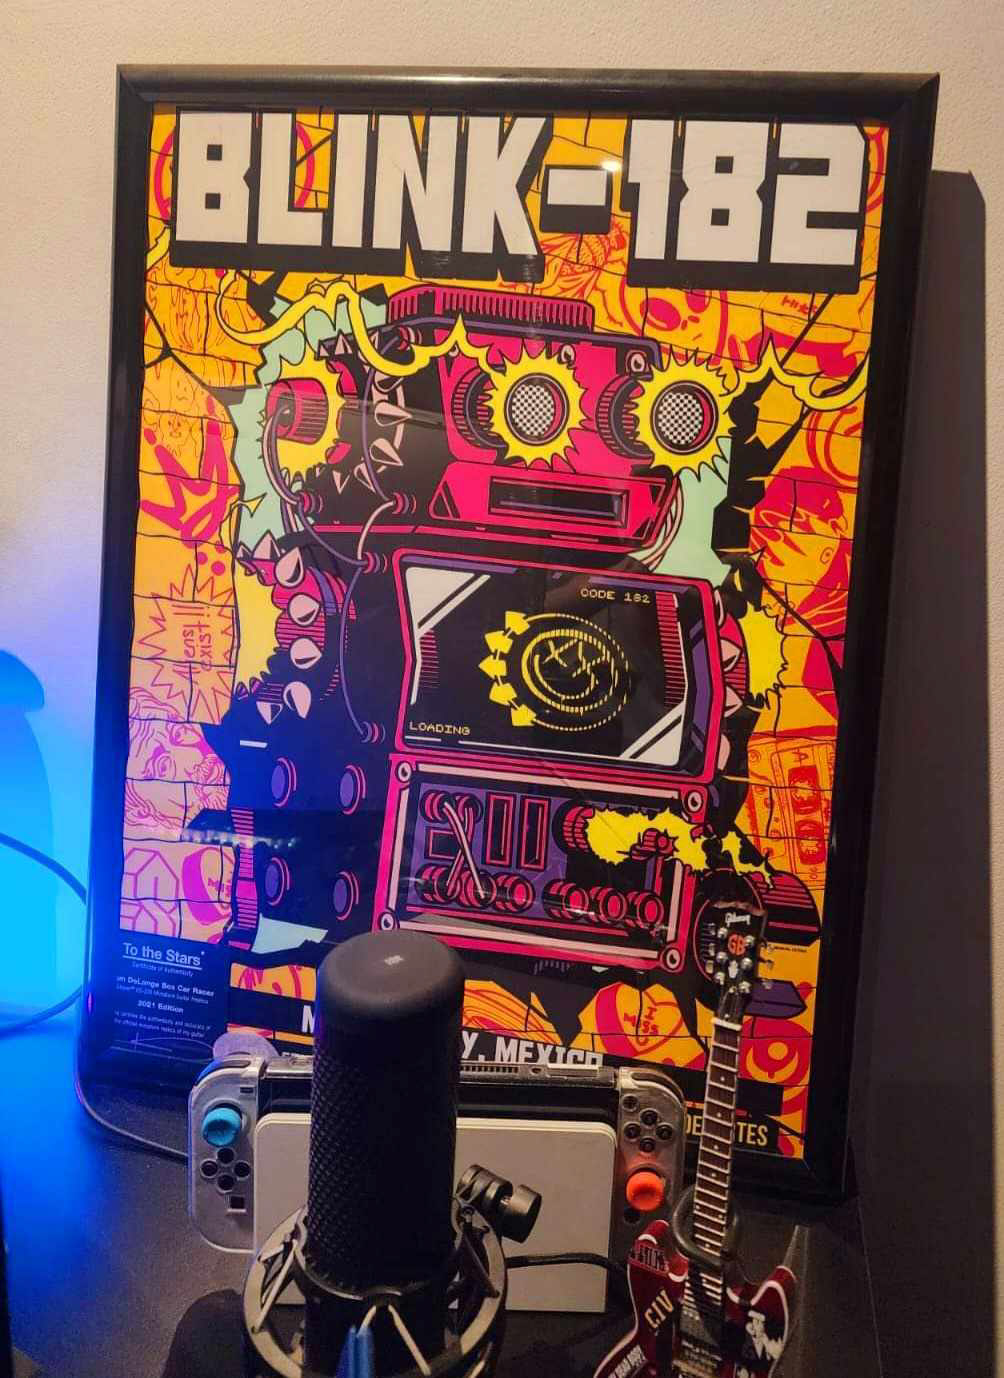 Blink 182 blink-182 mexico city poster Poster Design ILLUSTRATION  Cyberpunk robot music art